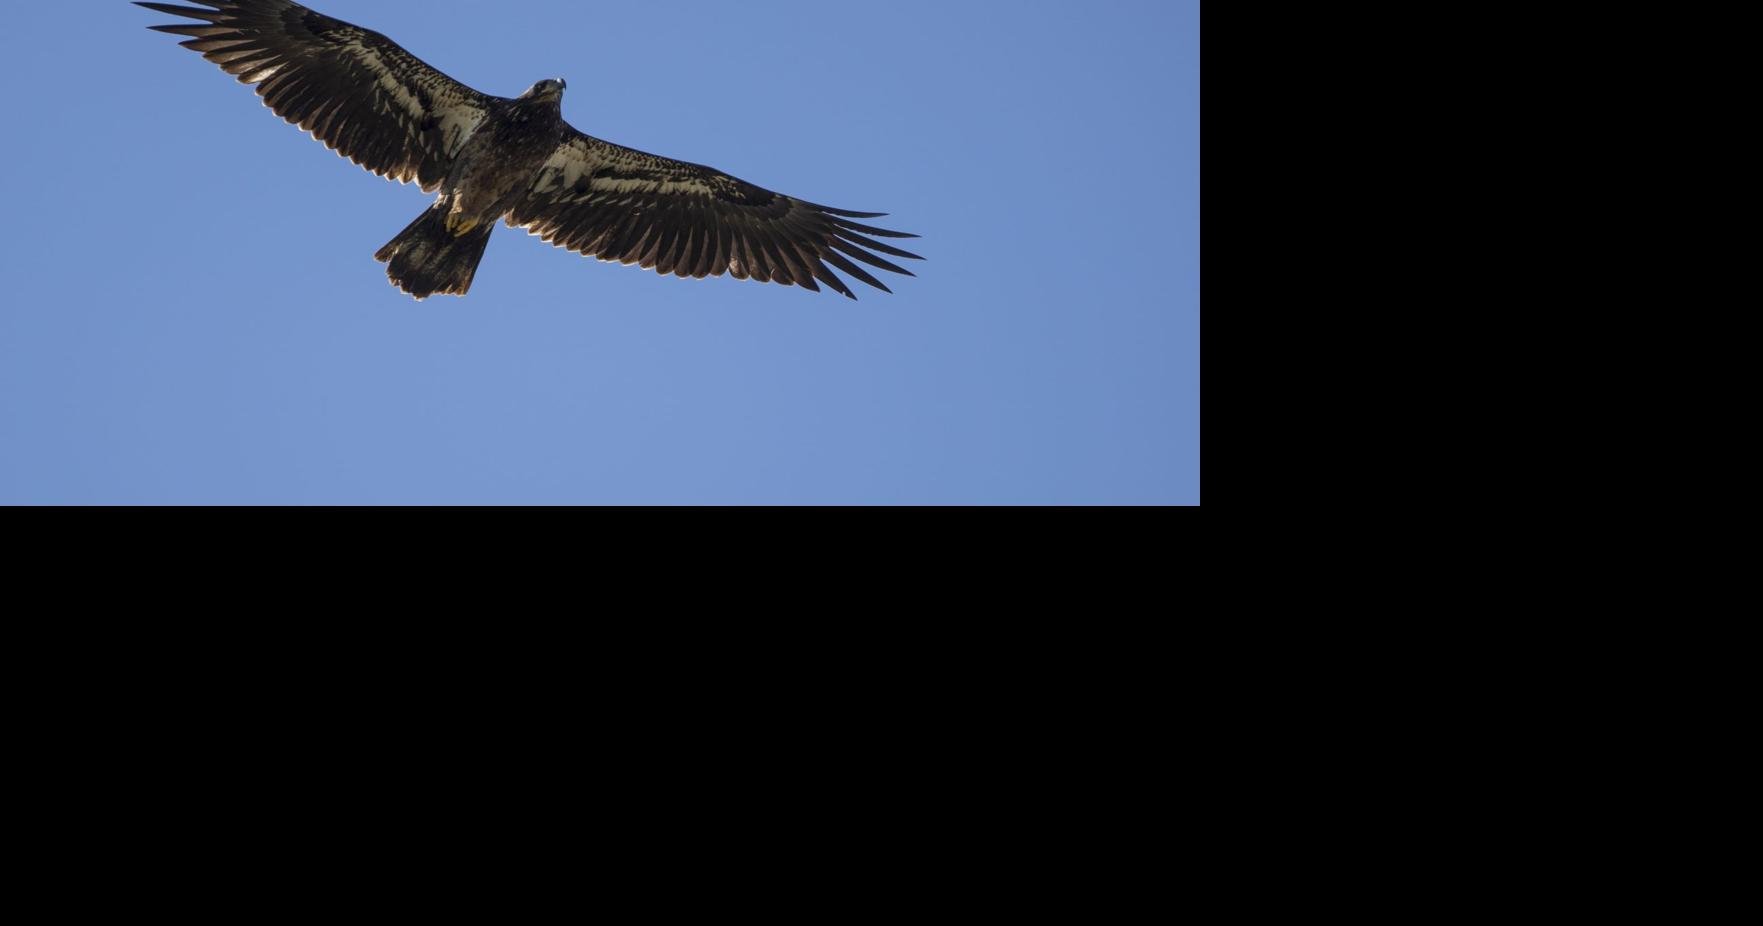 Discover the beauty of bald eagles at DeSoto National Wildlife Refuge